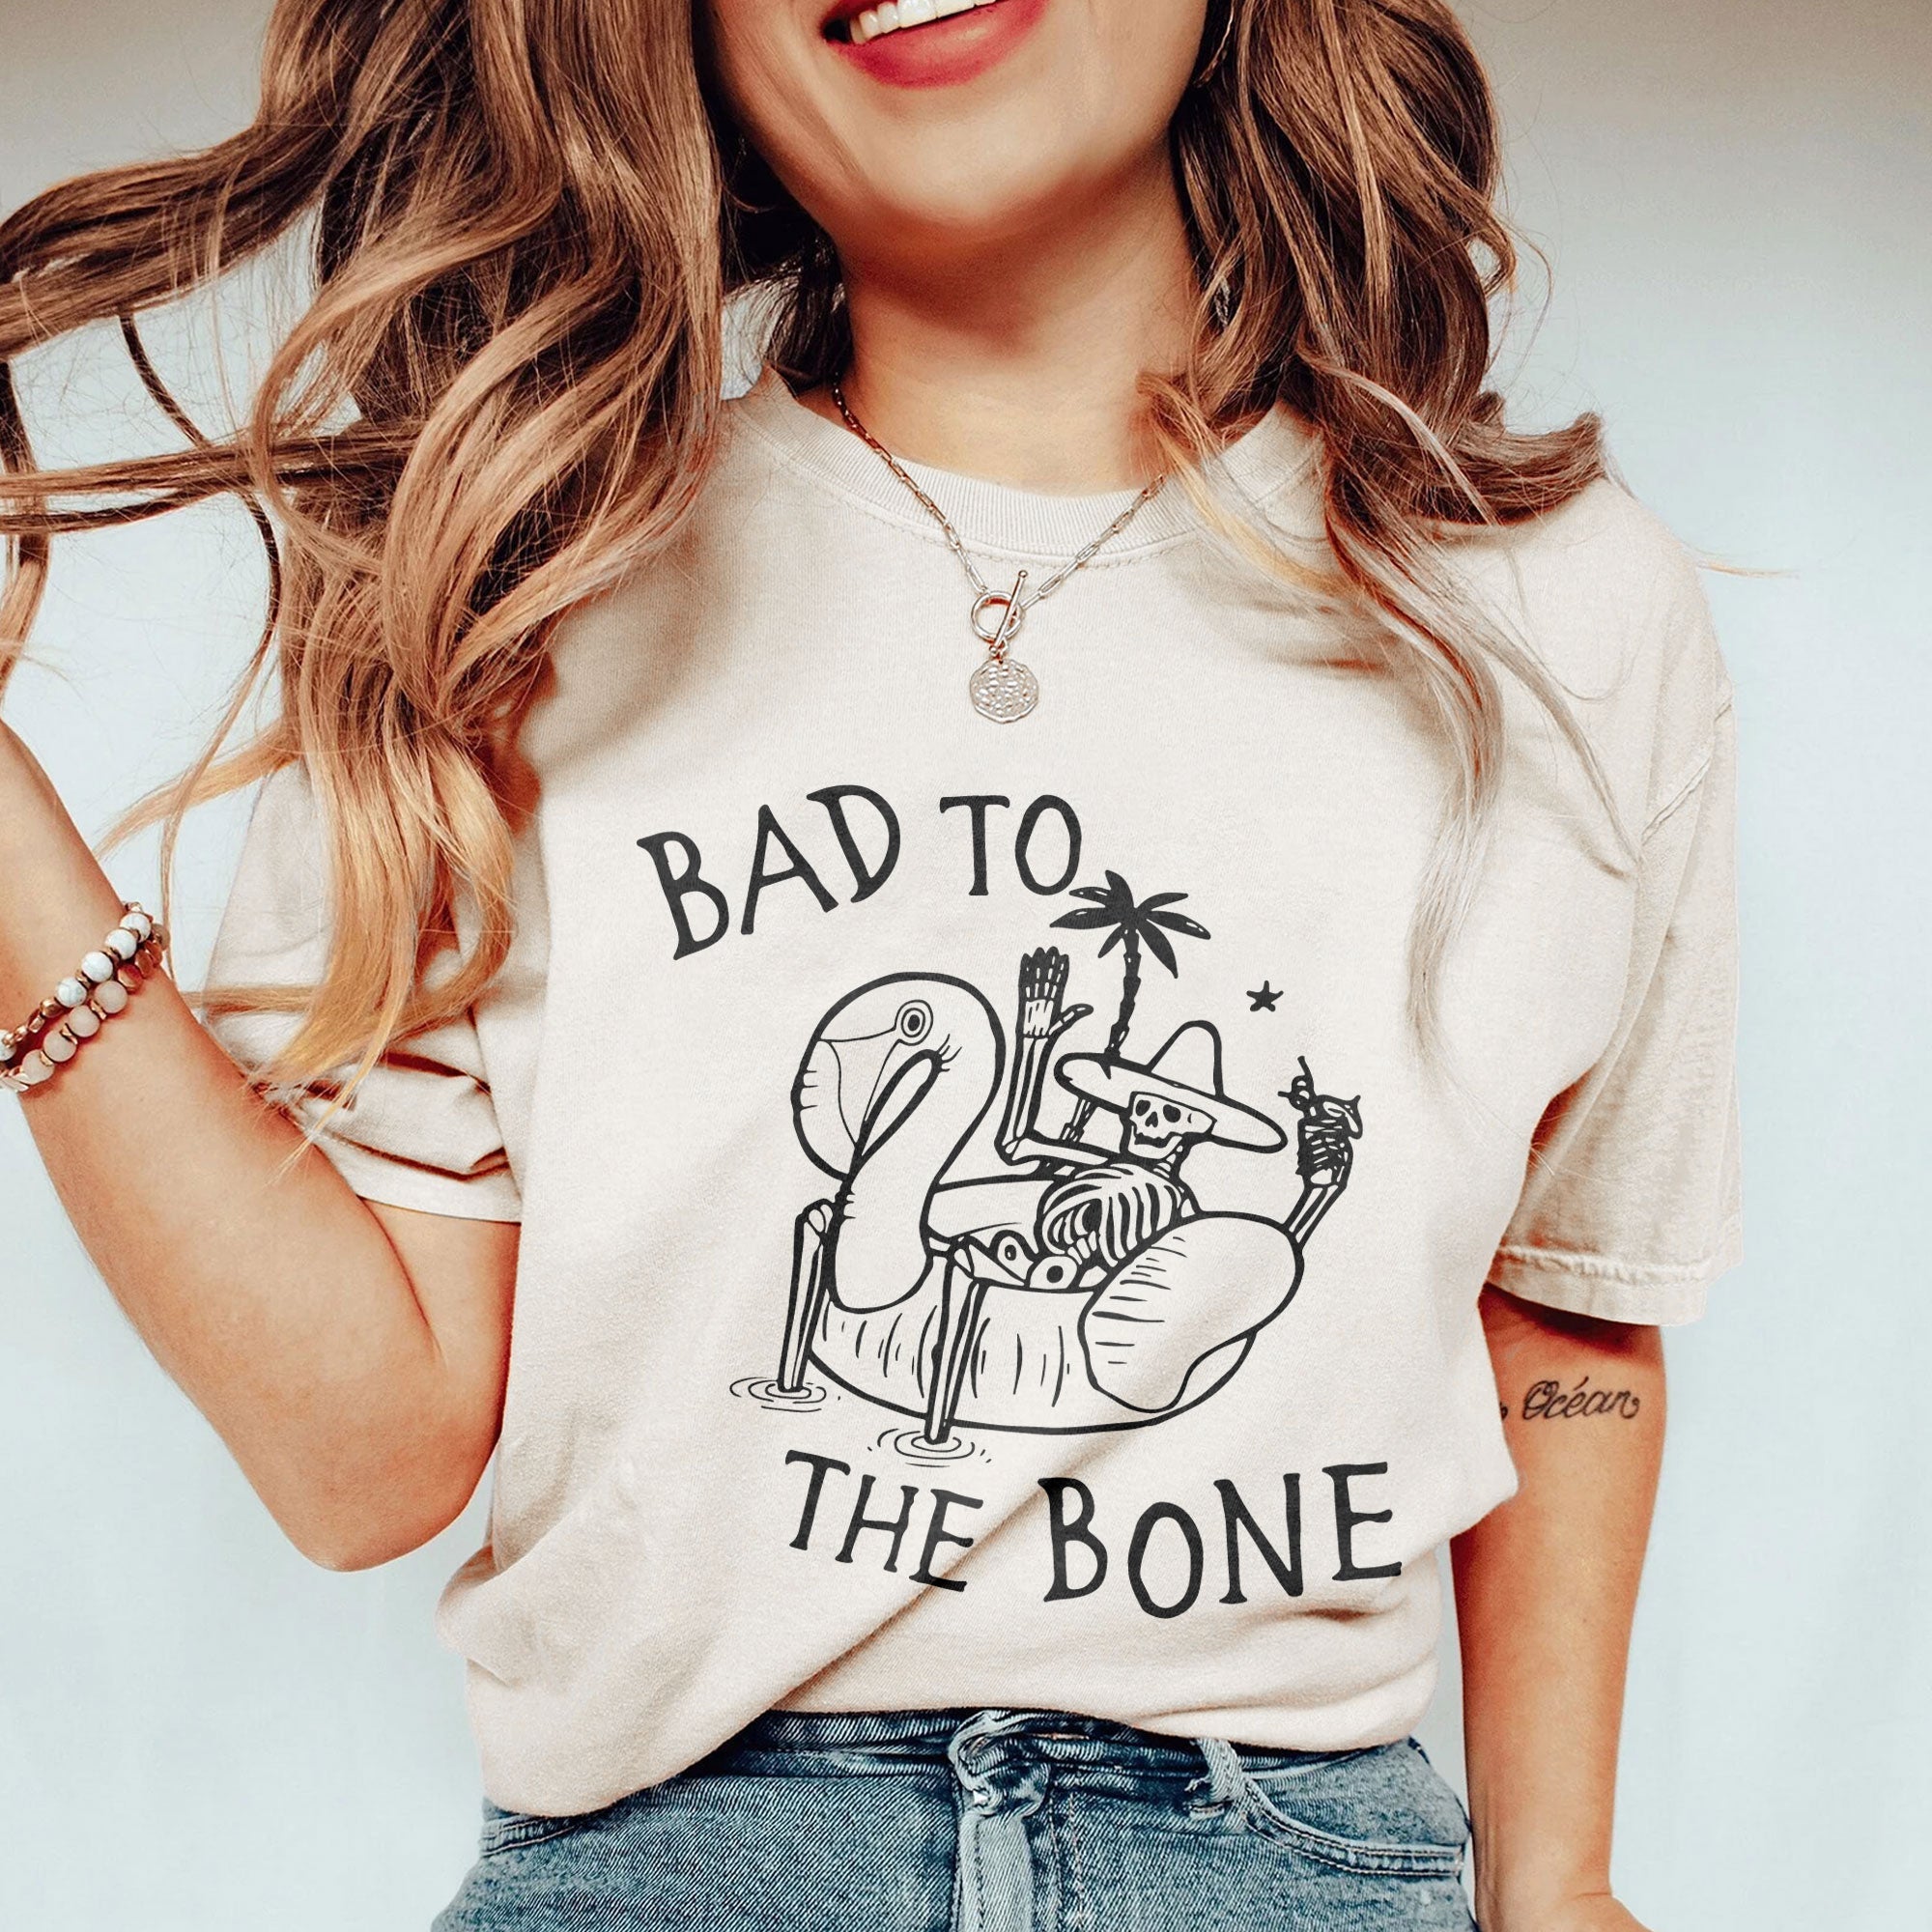 Bad To The Bone